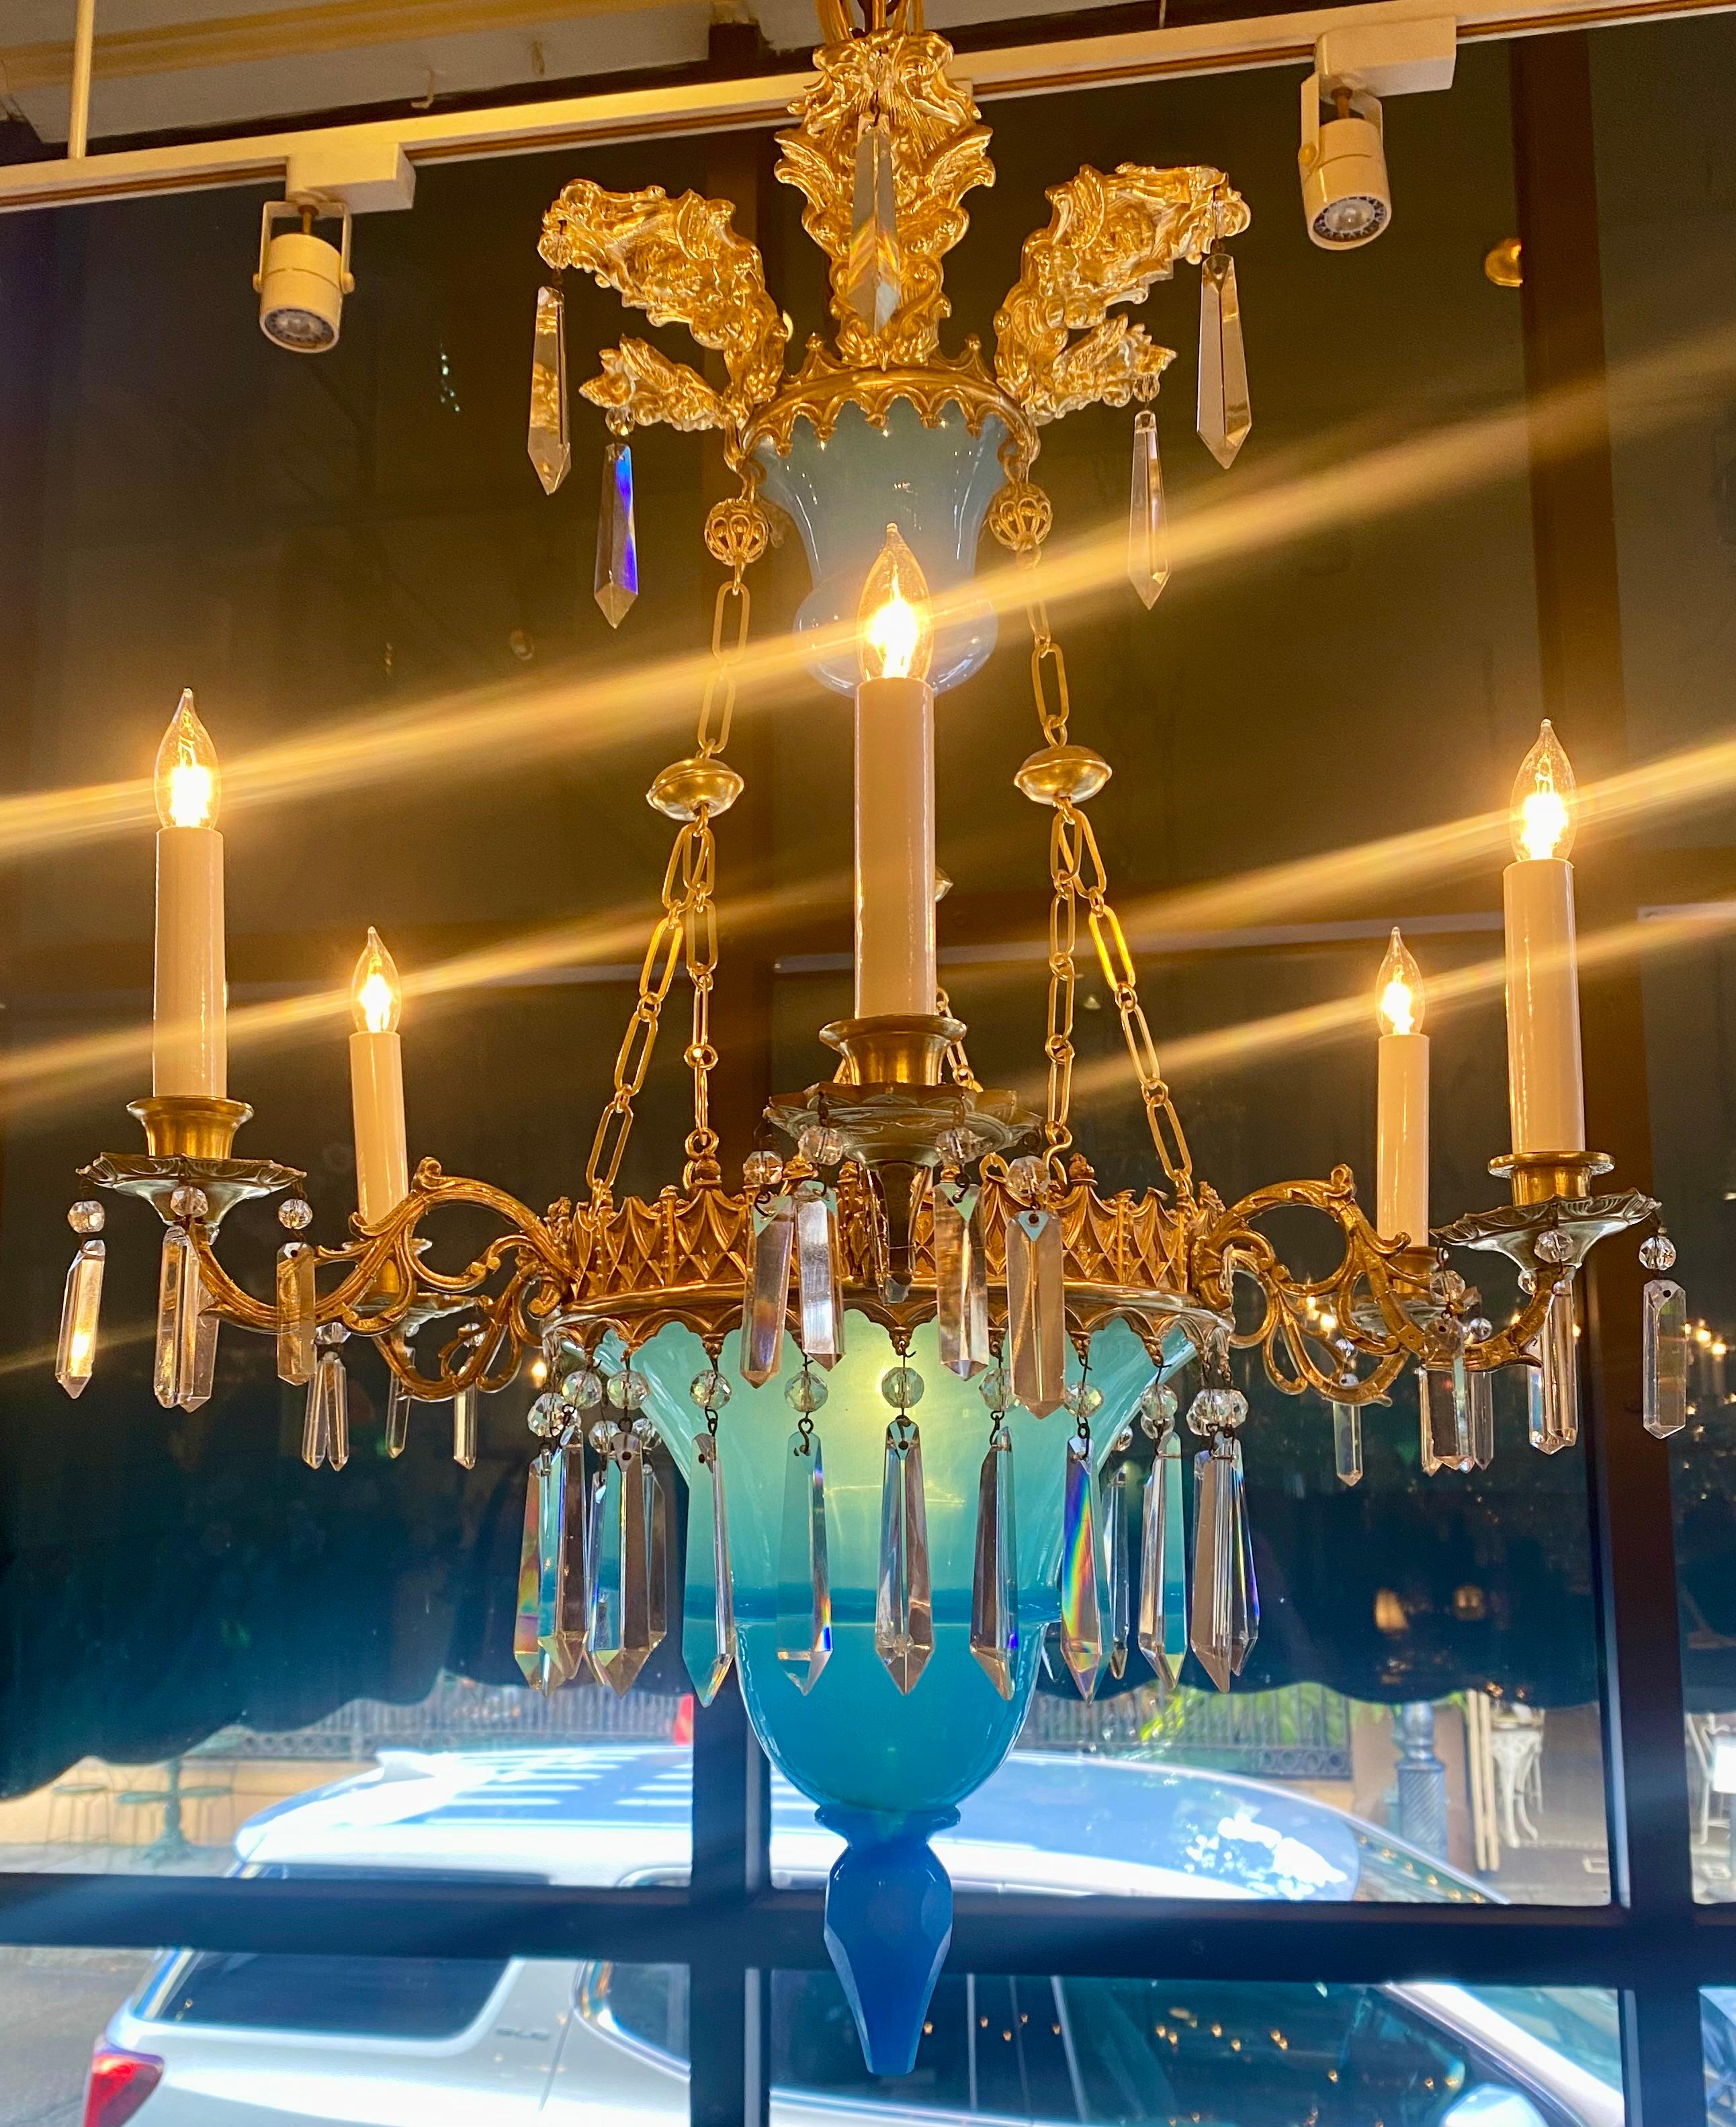 Rare antique early 19th century Northern European gilt metal & blue opaline glass chandelier.